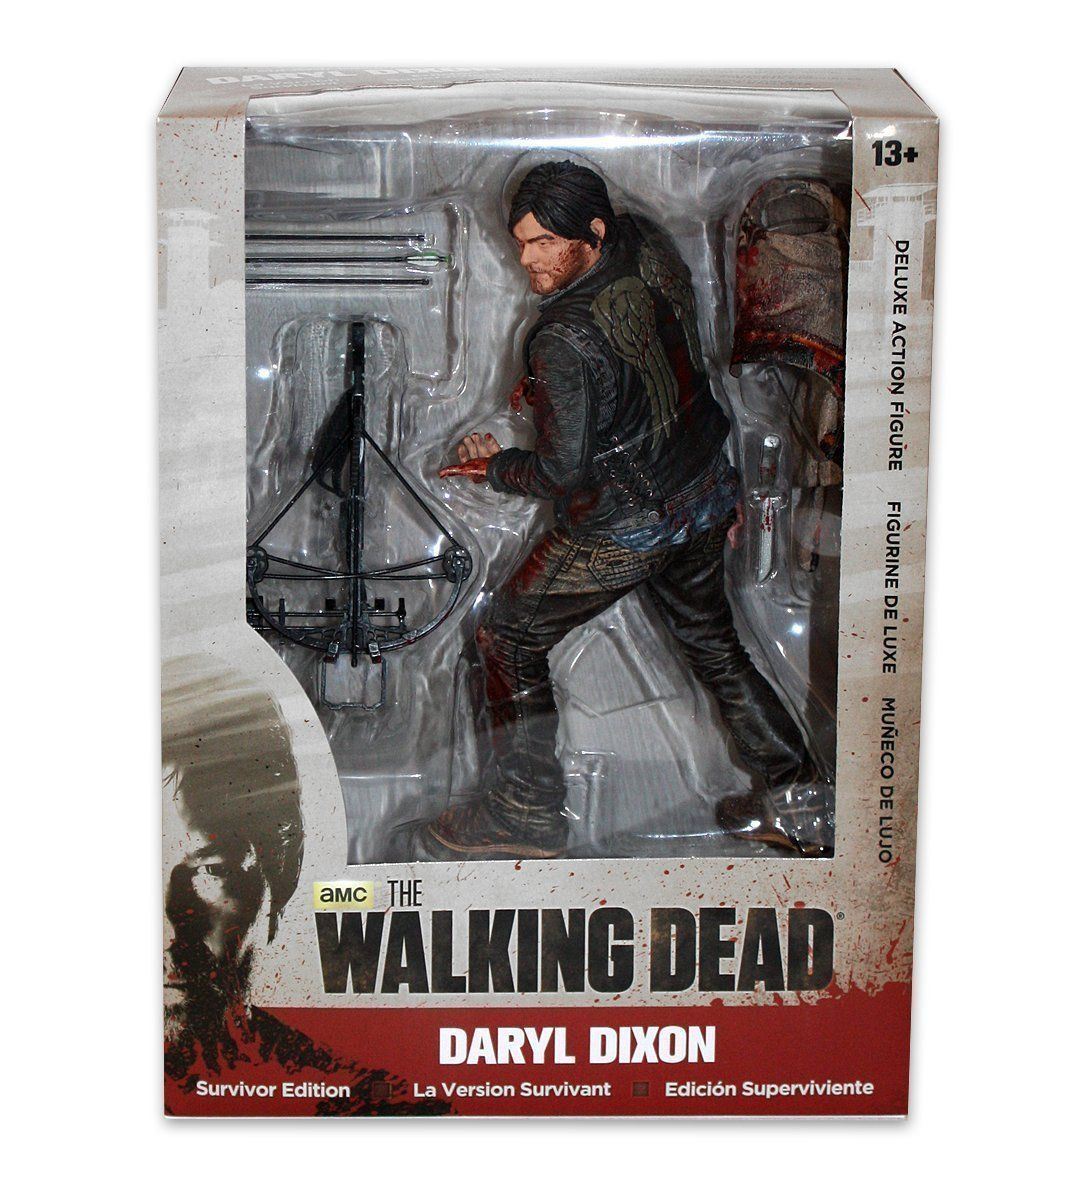 The Walking Dead Geschenke
 Amazon The Walking Dead Daryl Dixon 25cm Deluxe Figur